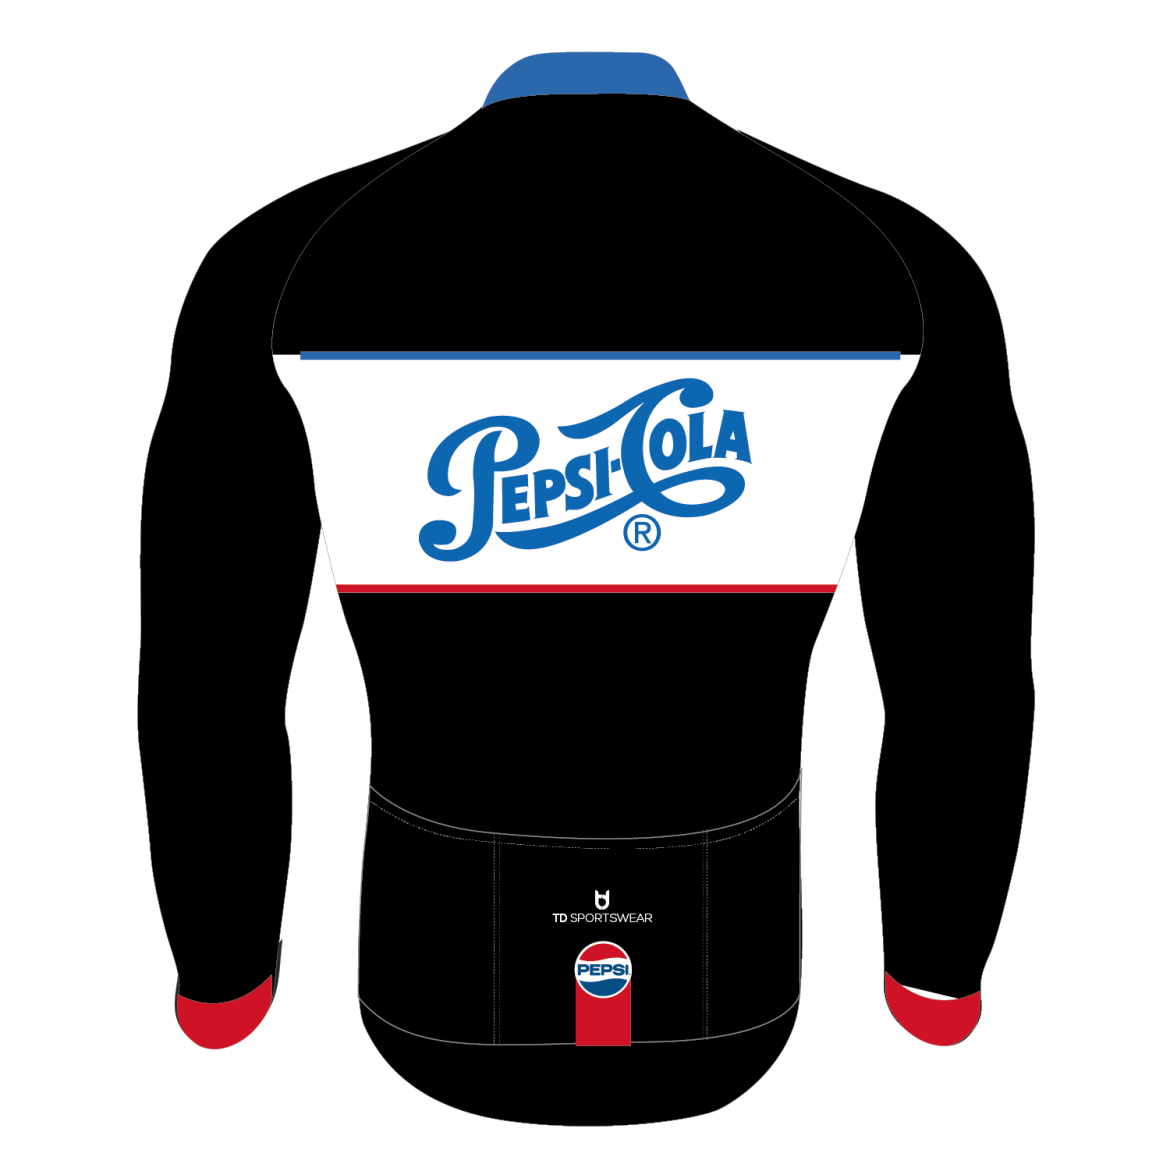 Pepsico jacket cycling back side